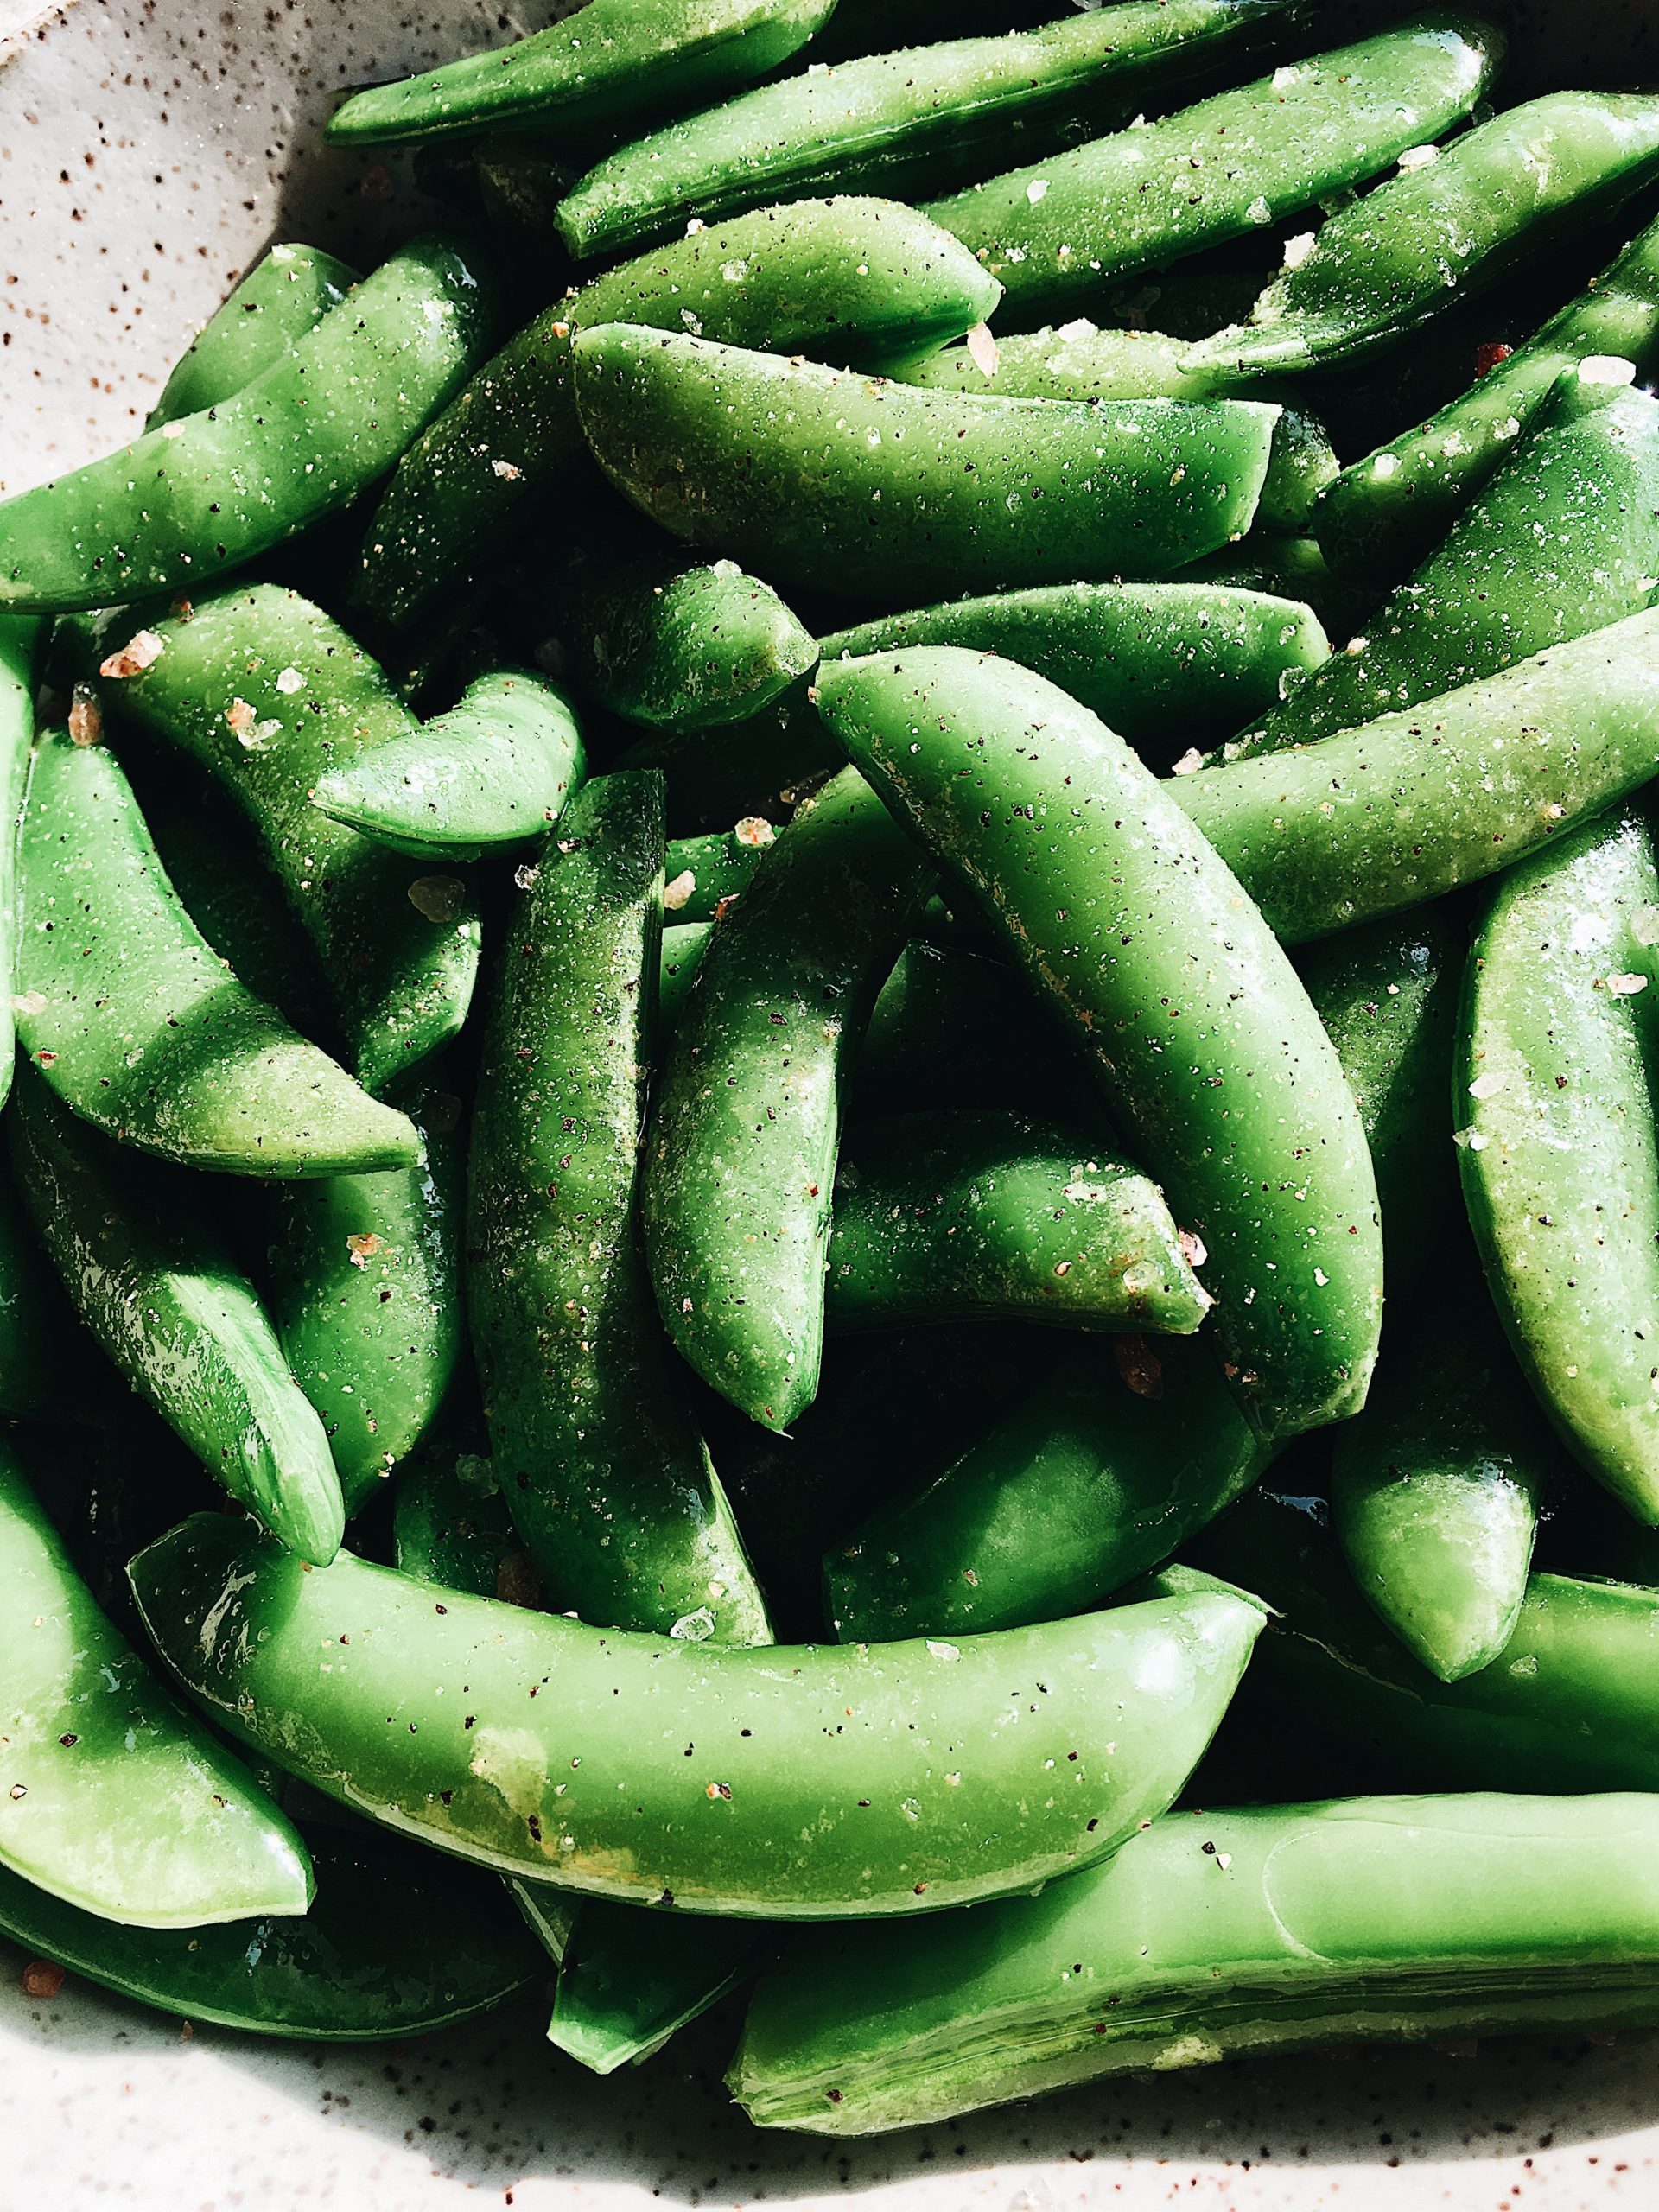 A close up view of sautéed sugar snap peas.